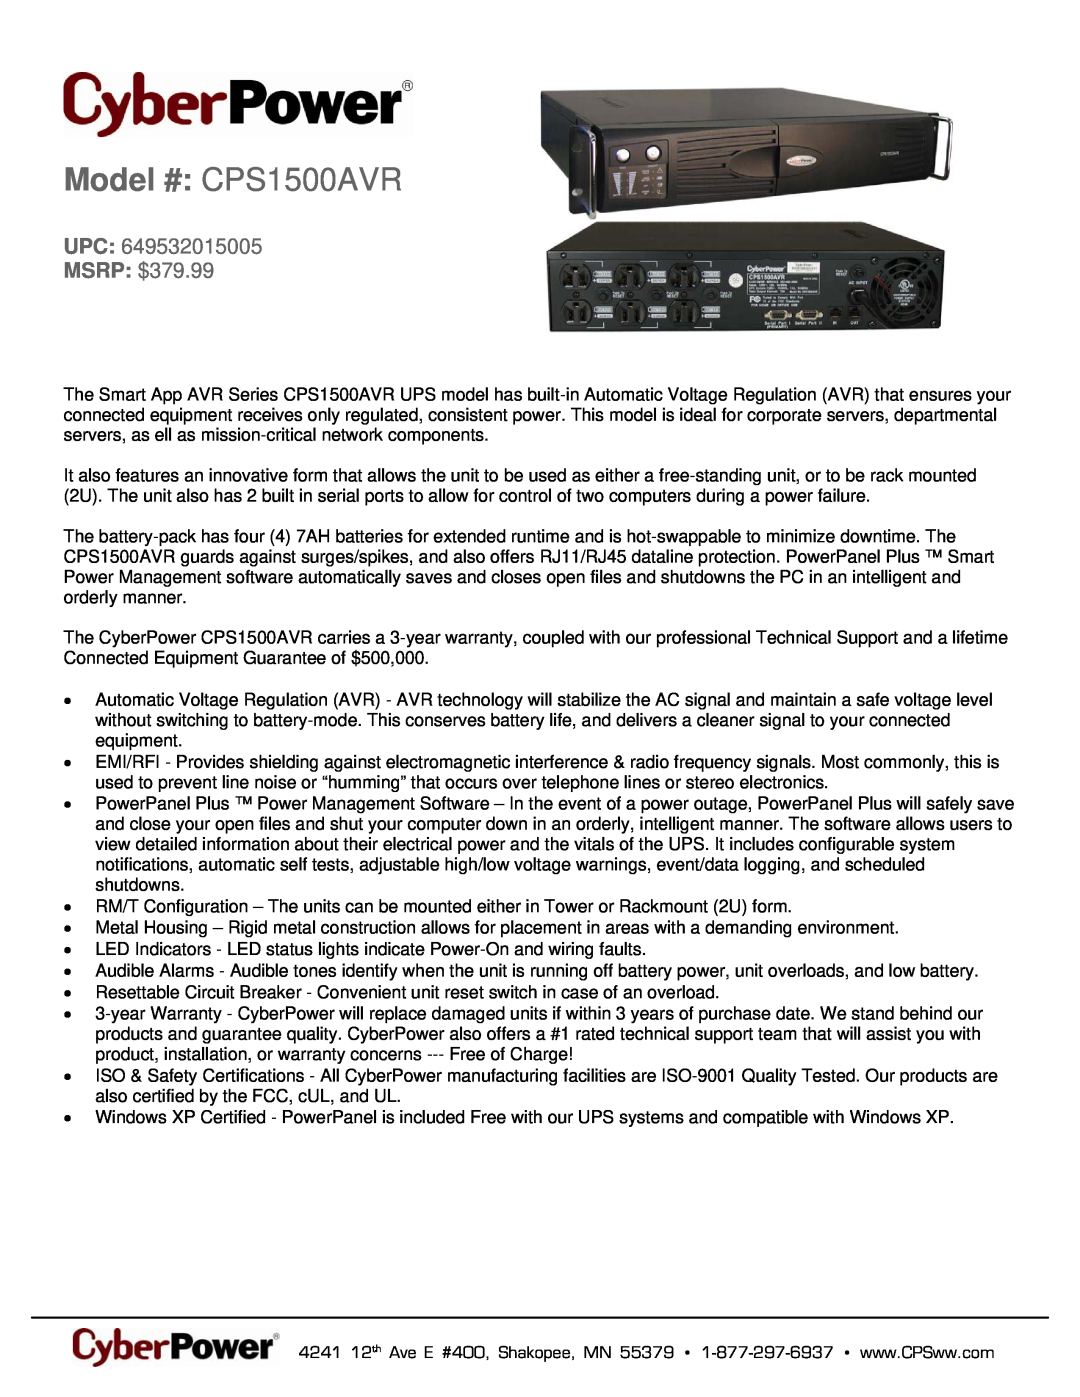 CyberPower Systems 649532015005 warranty Model # CPS1500AVR, UPC MSRP $379.99 